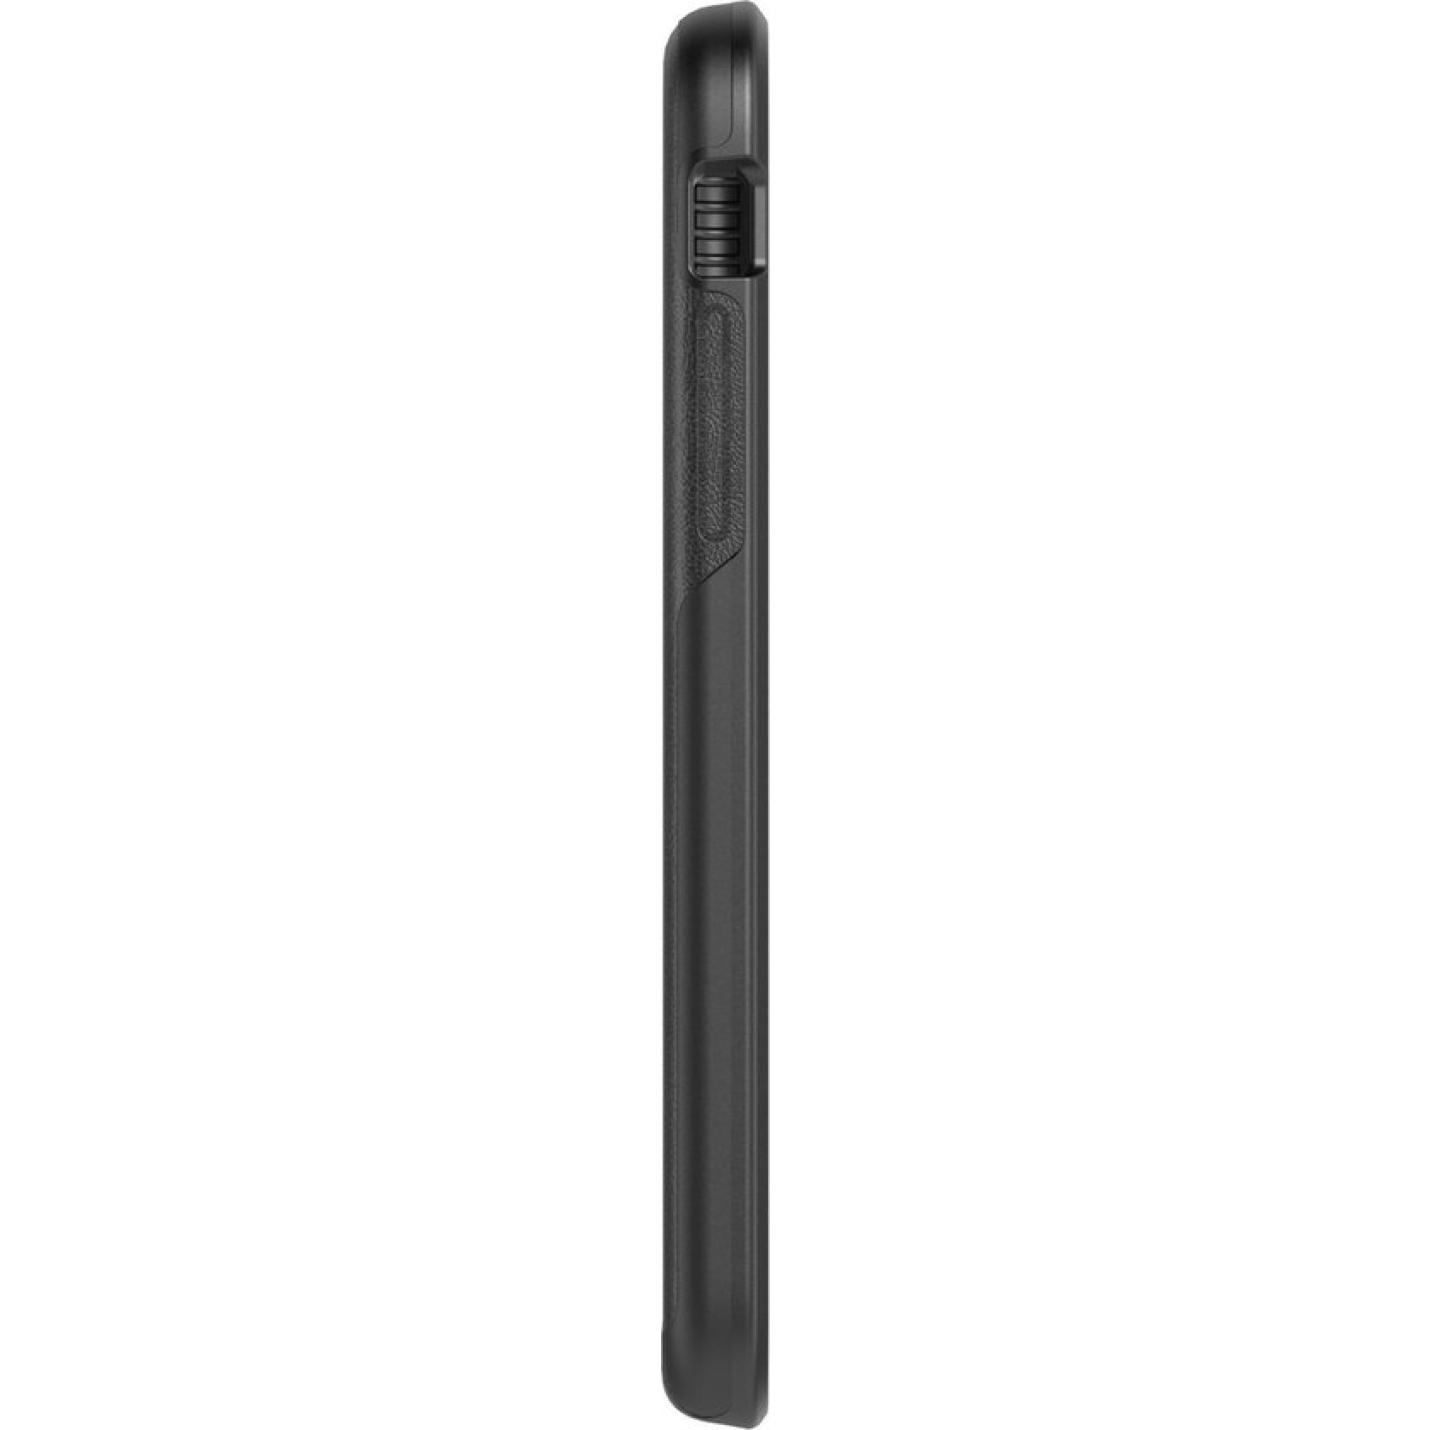 Tech21 Evo Luxe Black Leather backcover voor iPhone X-Xs - zwart 7